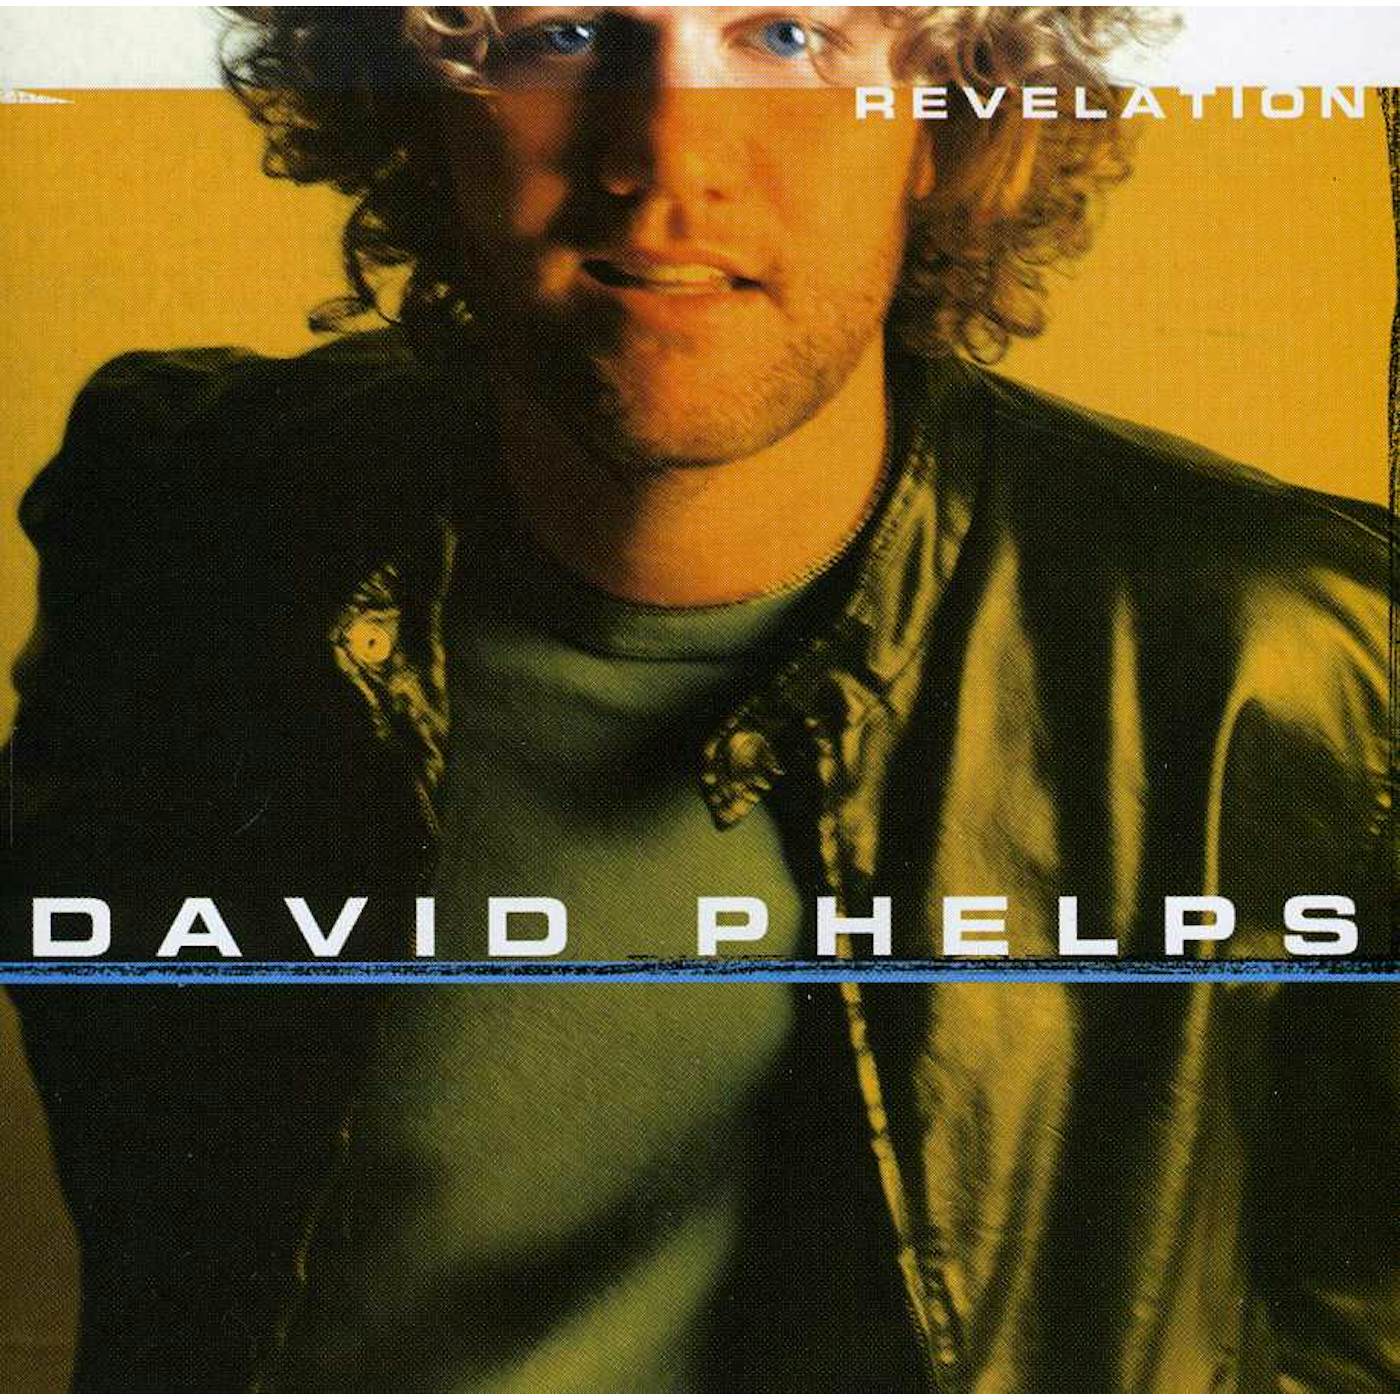 David Phelps REVELATION CD